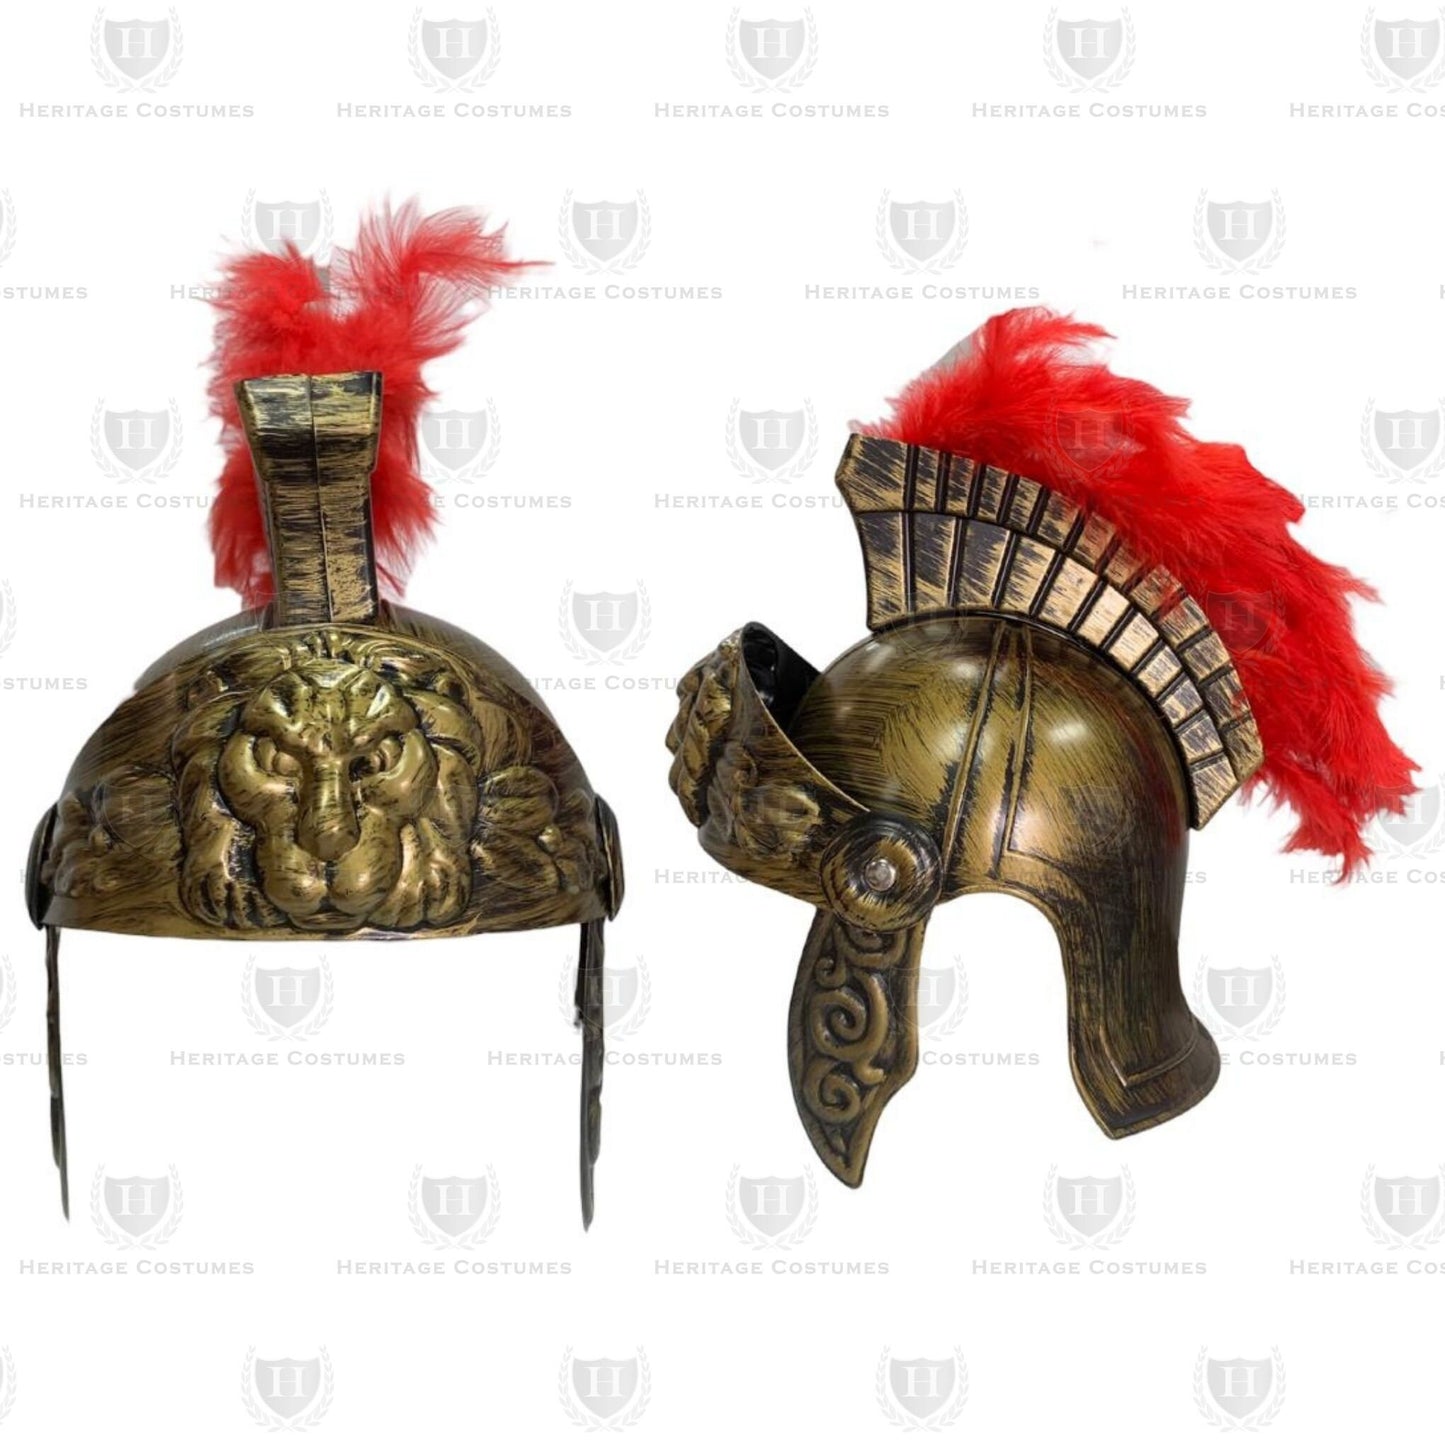 Constantine "The Great" Roman Military Uniform